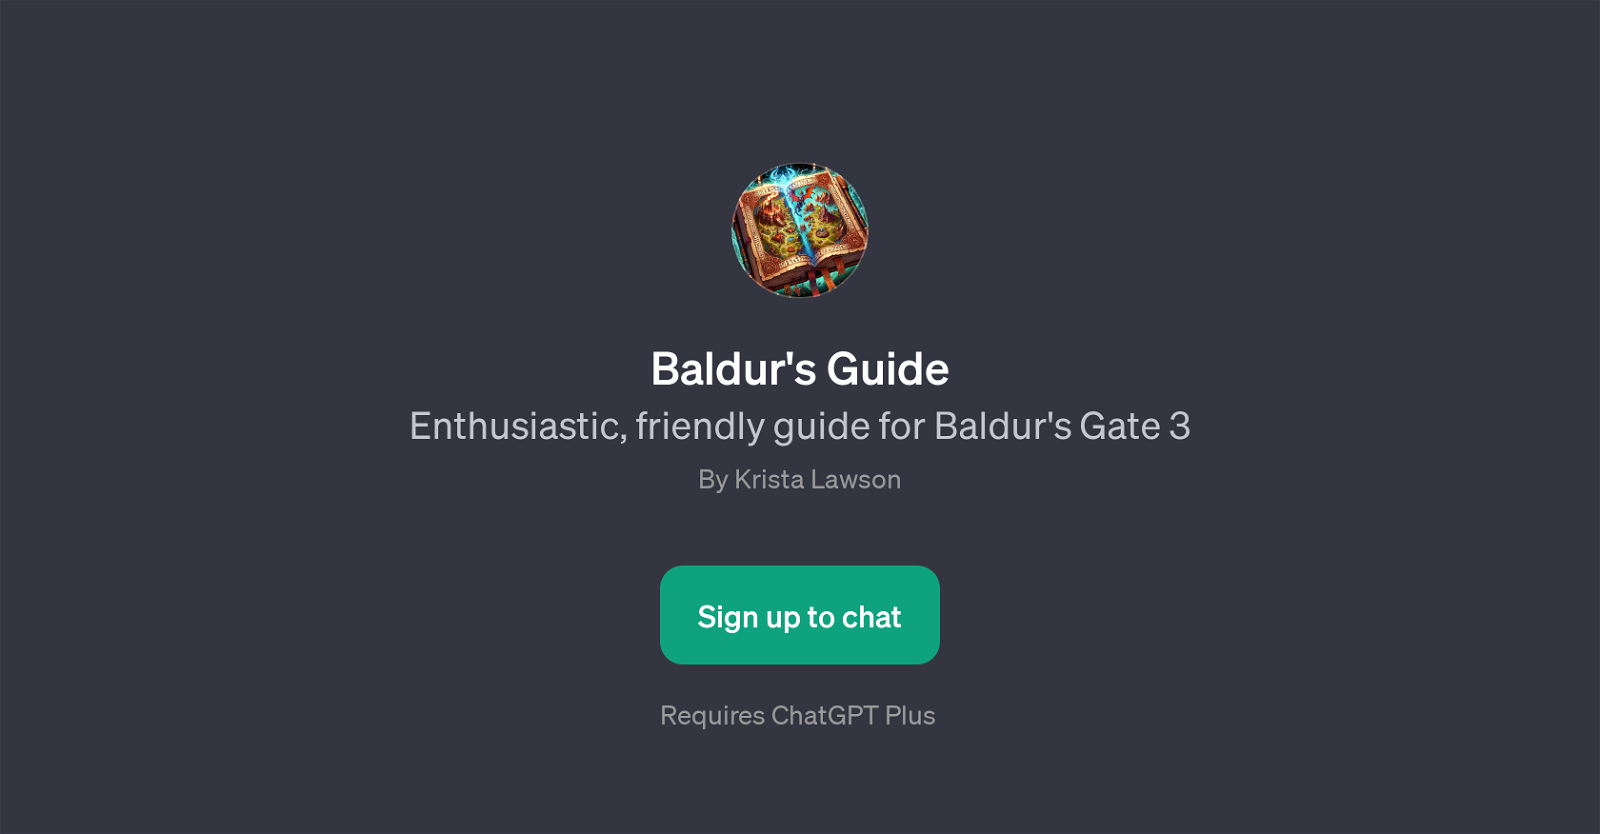 Baldur's Guide website